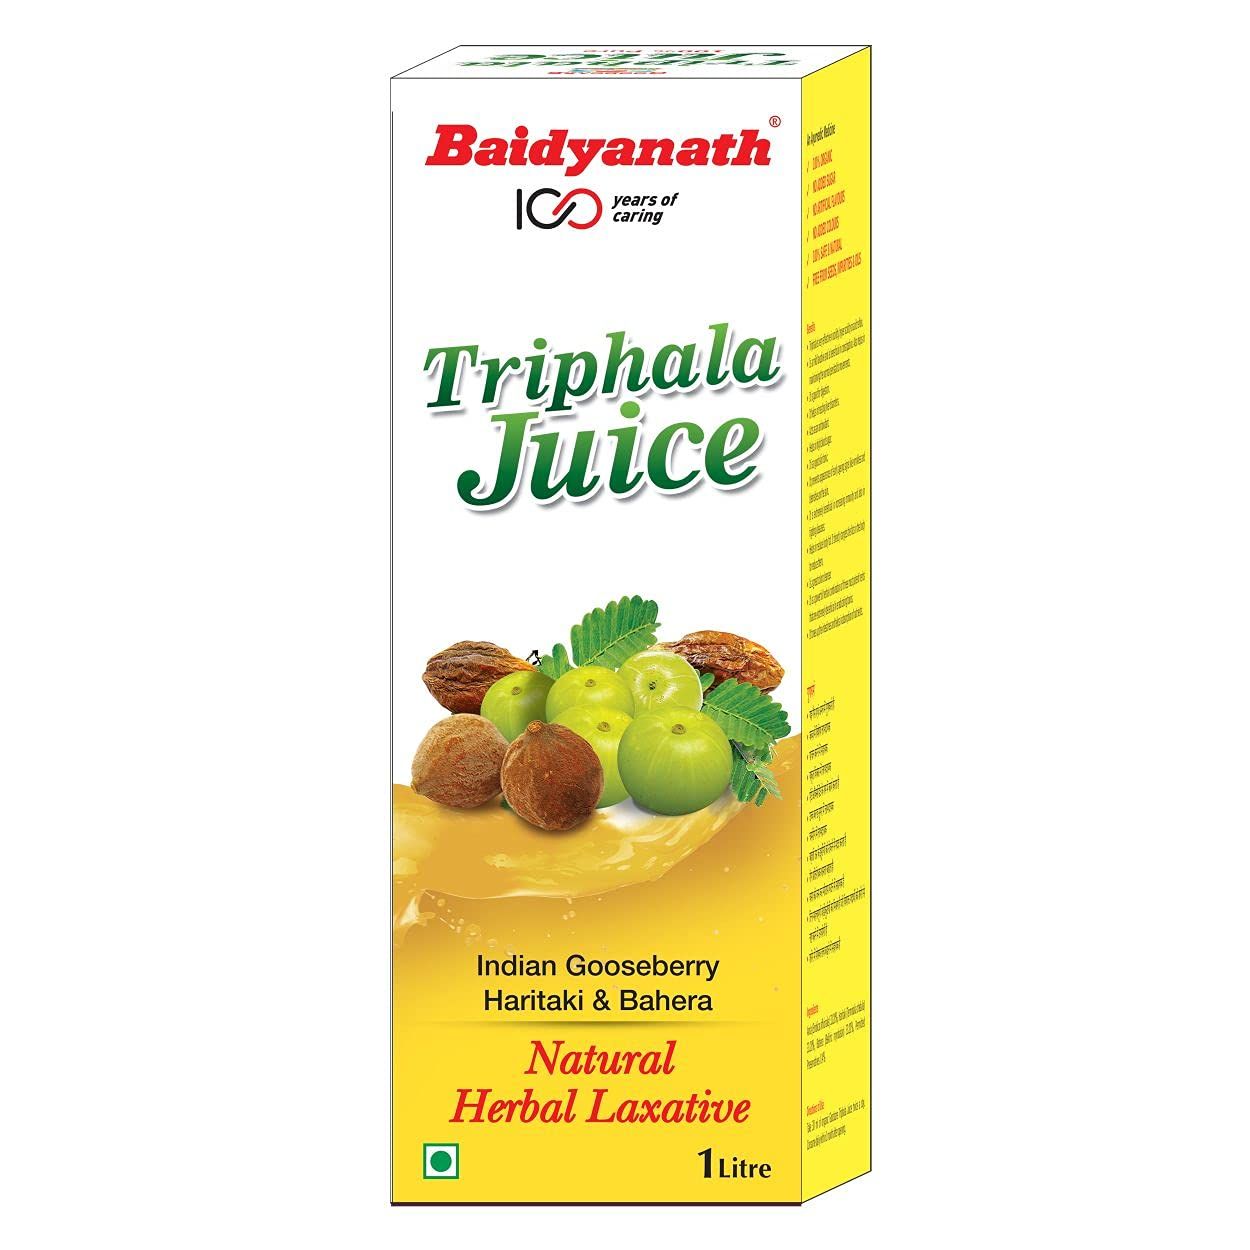 Baidyanath Triphala Juice Herbal Laxative Image